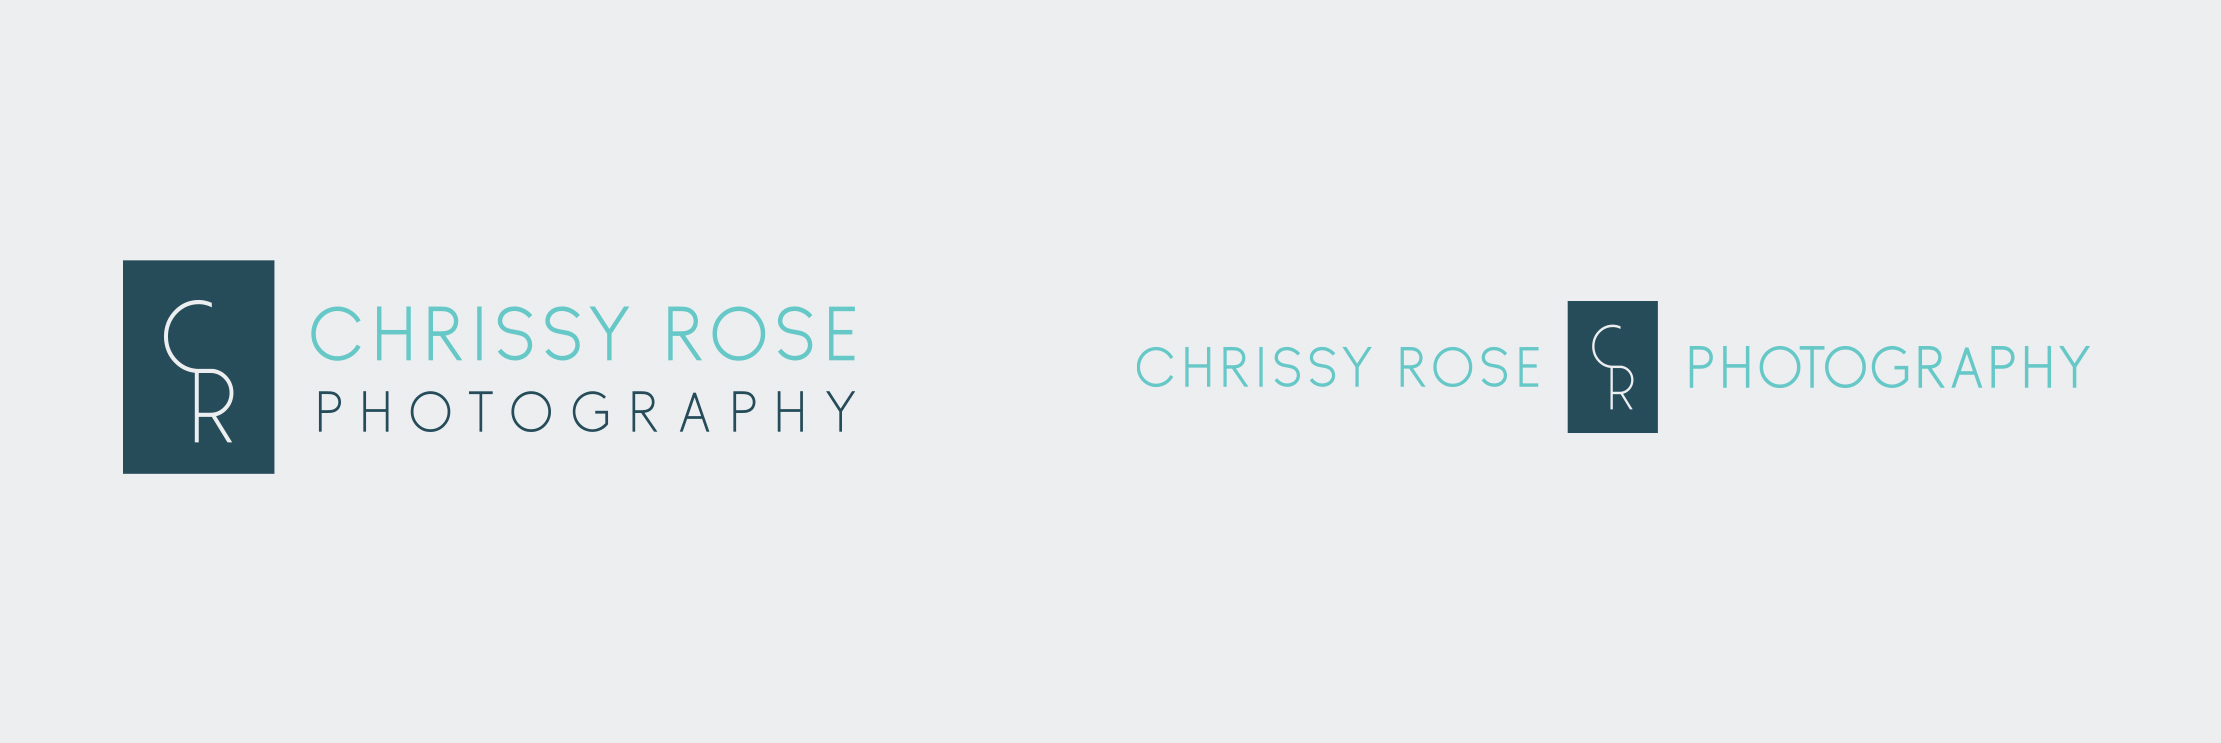 Chrissy Rose Photography Lifestyle